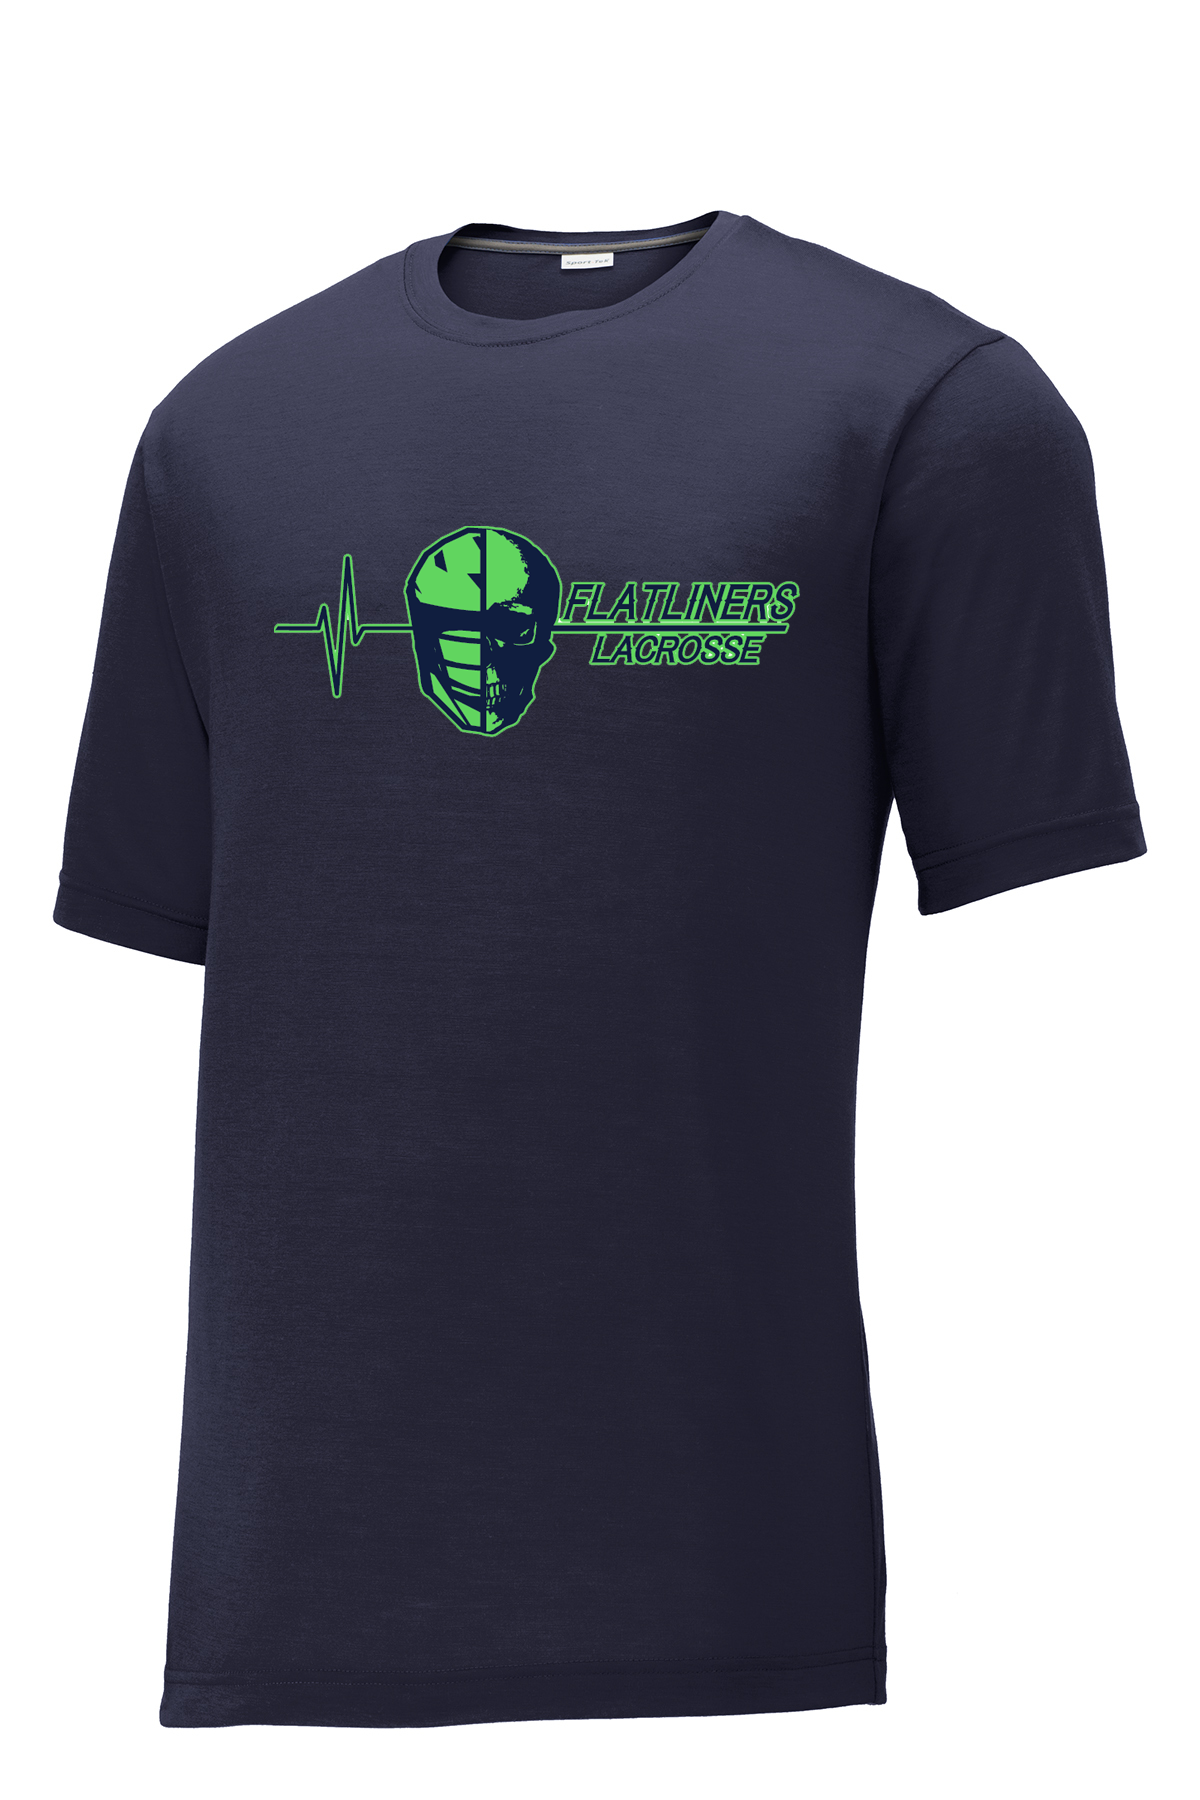 Flatliners Lacrosse Navy CottonTouch Performance T-Shirt